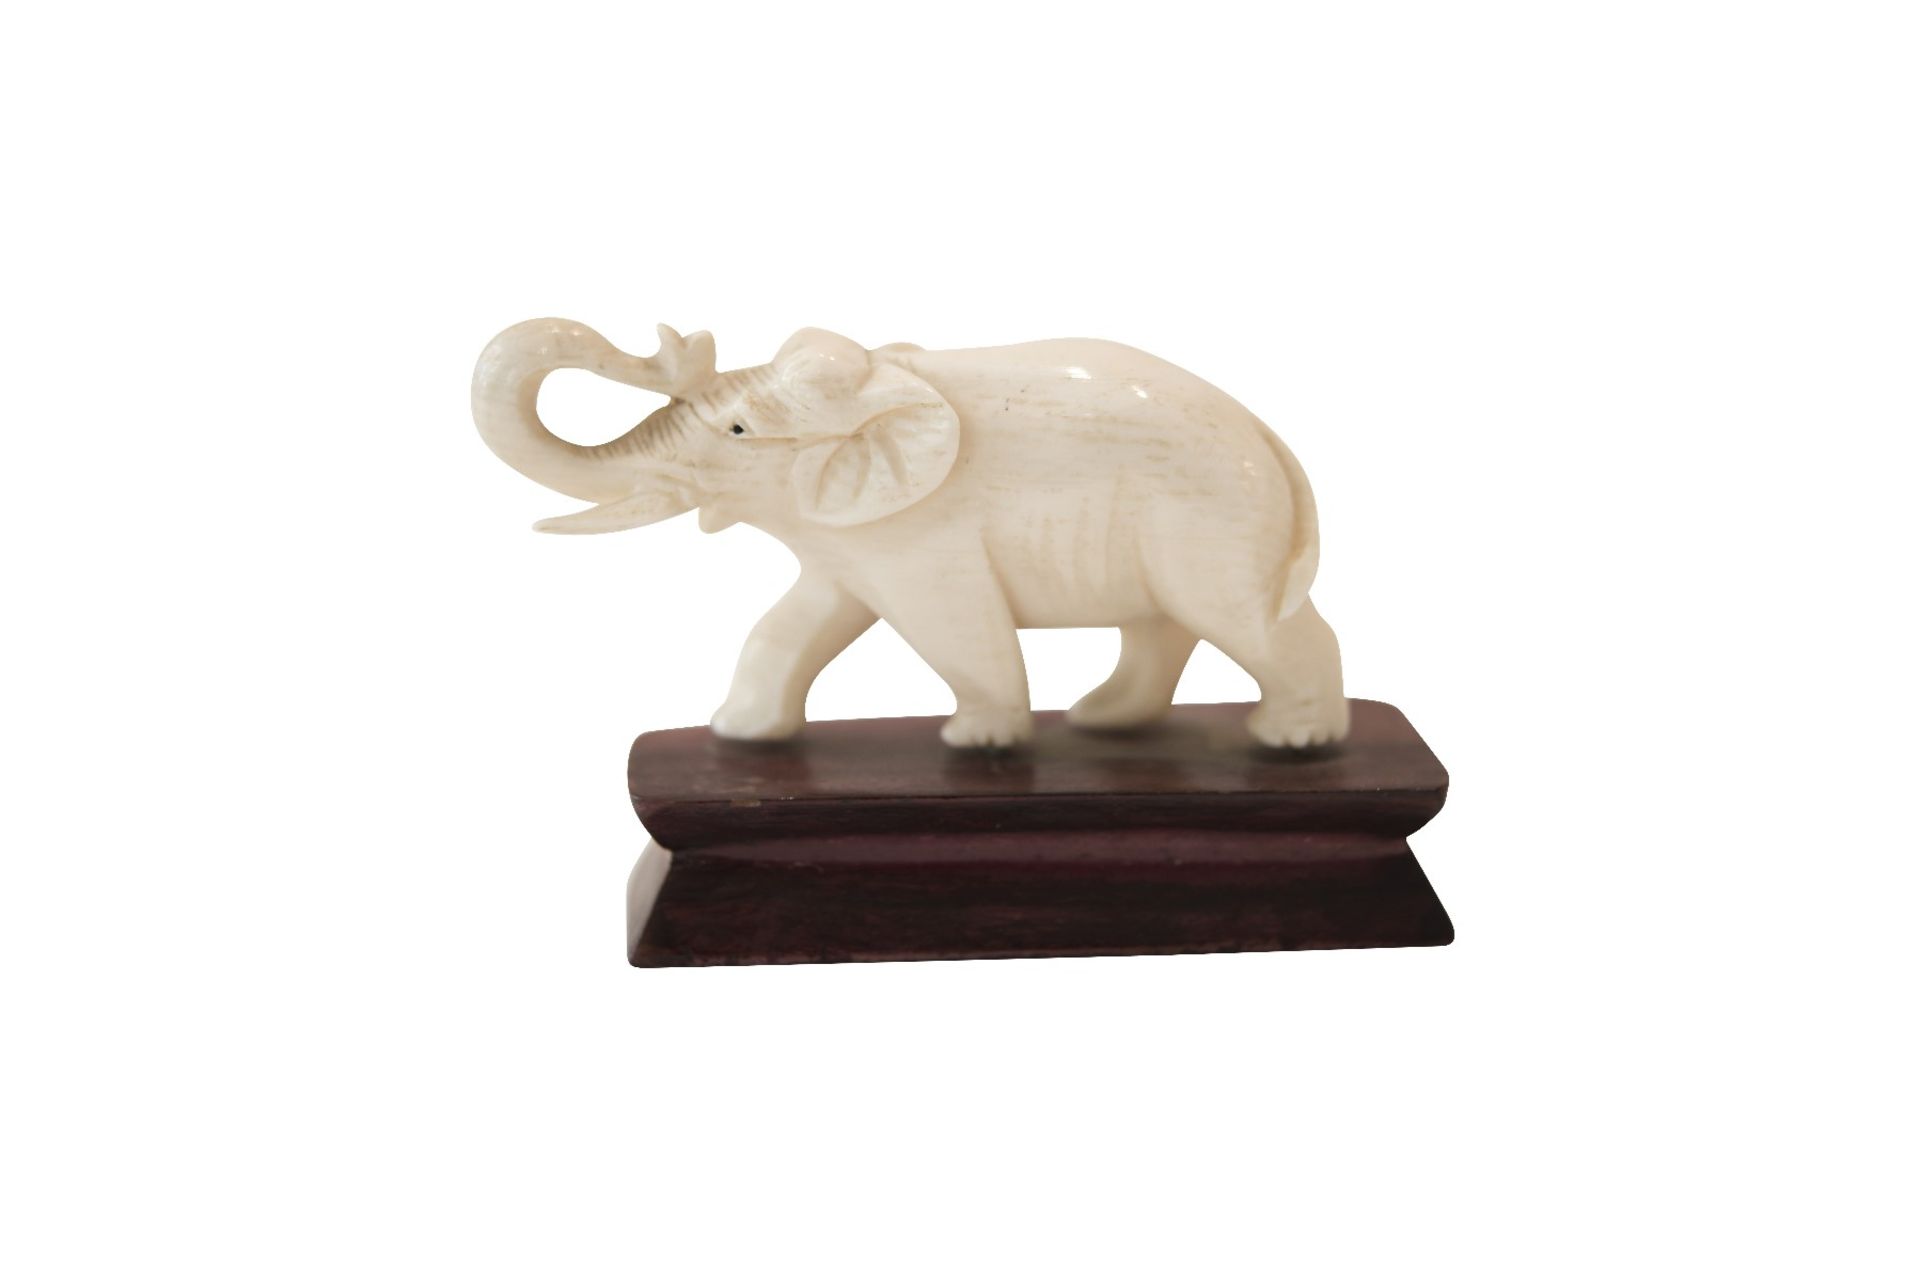 Small elephant on wooden base - Image 2 of 6